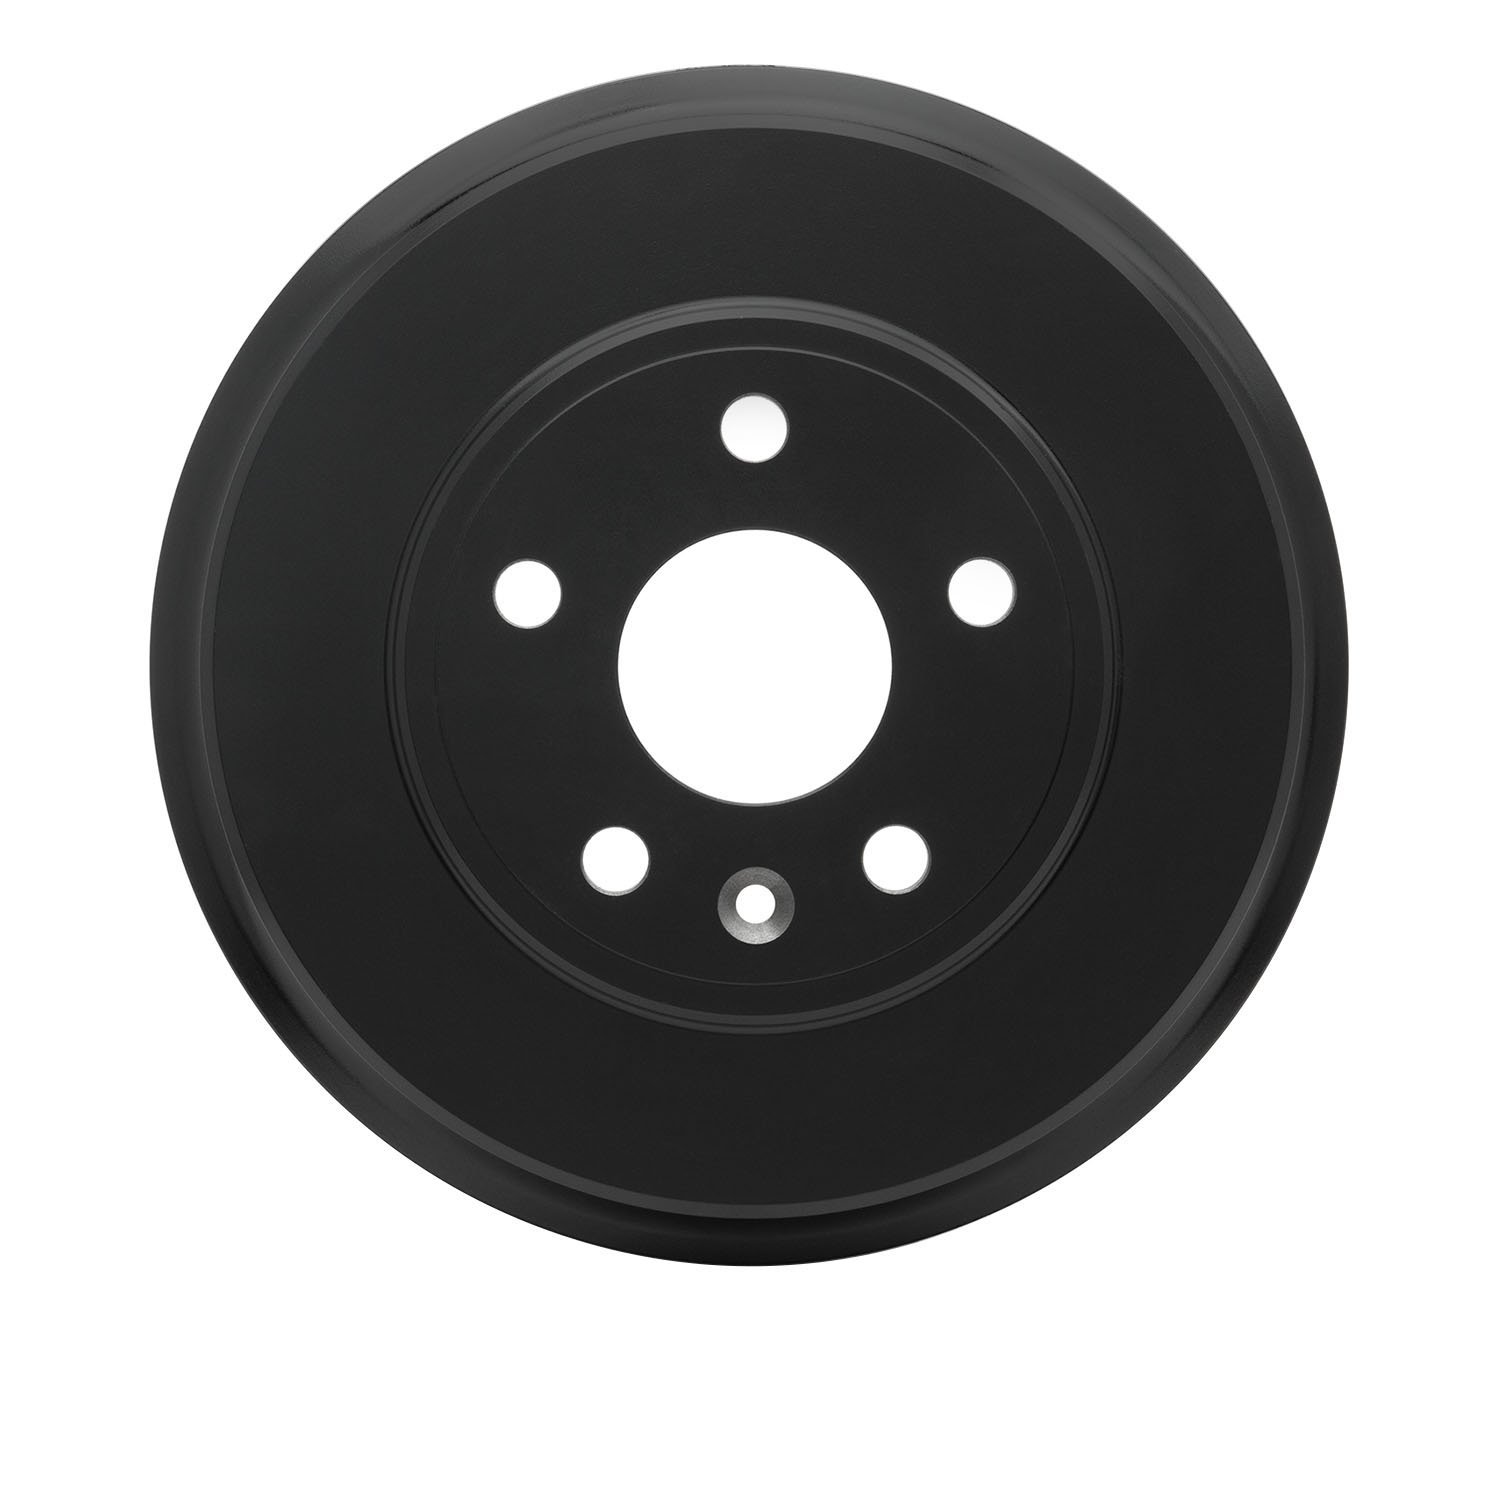 365-47030 True-Balanced Brake Drum, Fits Select GM, Position: Rear